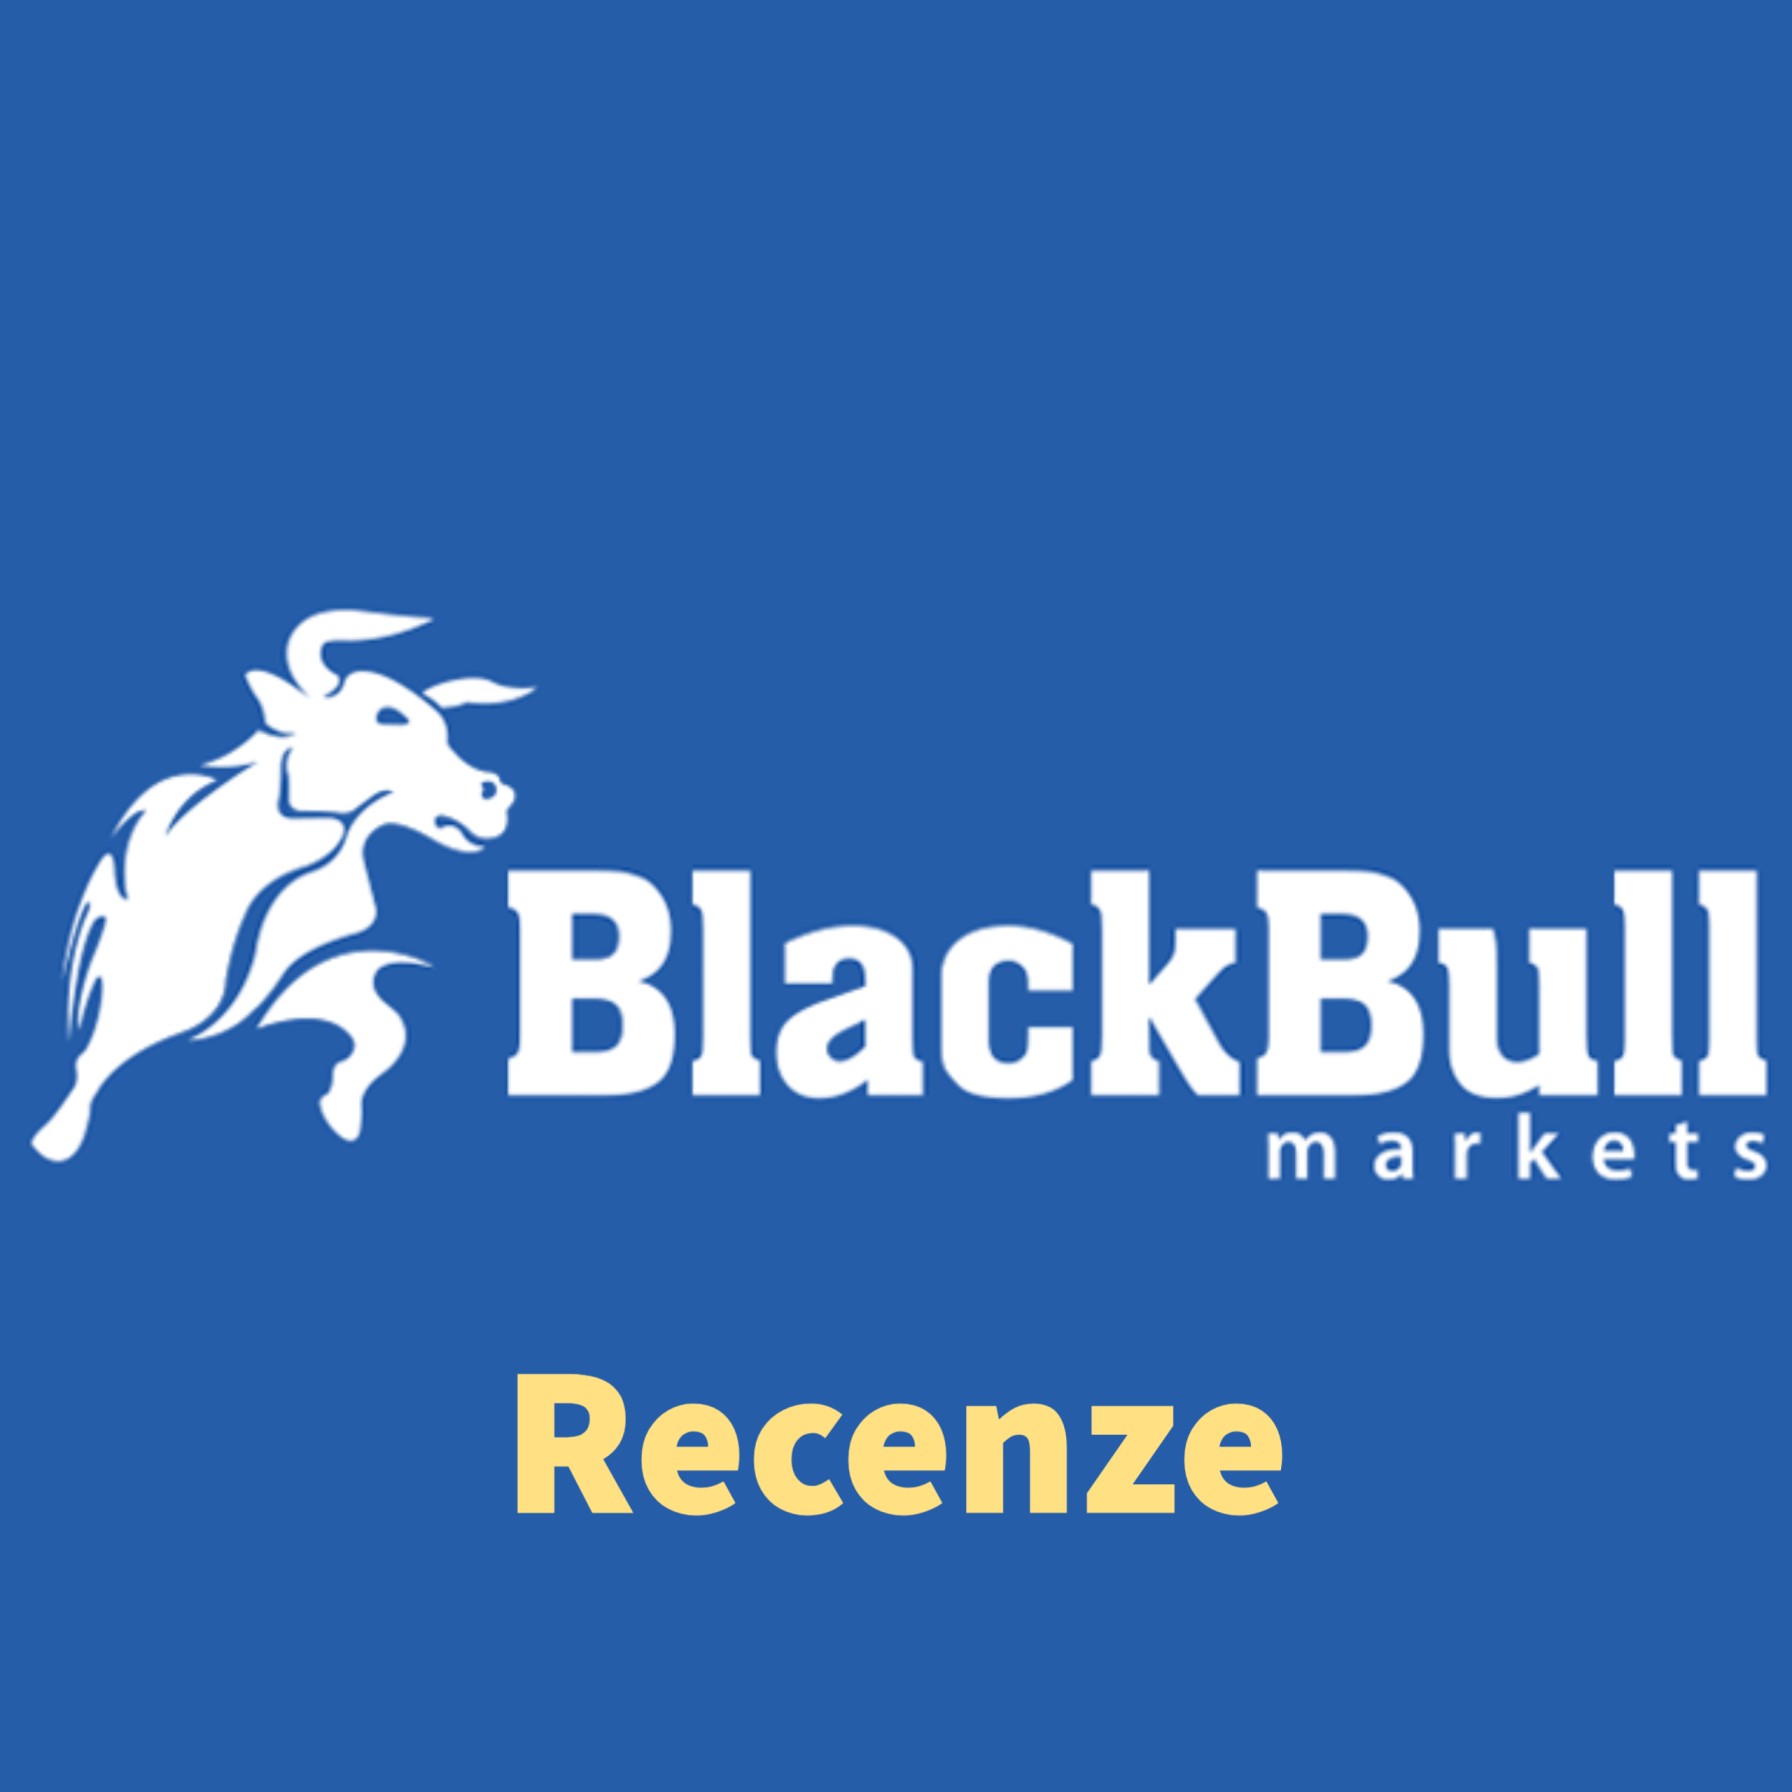 Blackbull Markets recenze (1)